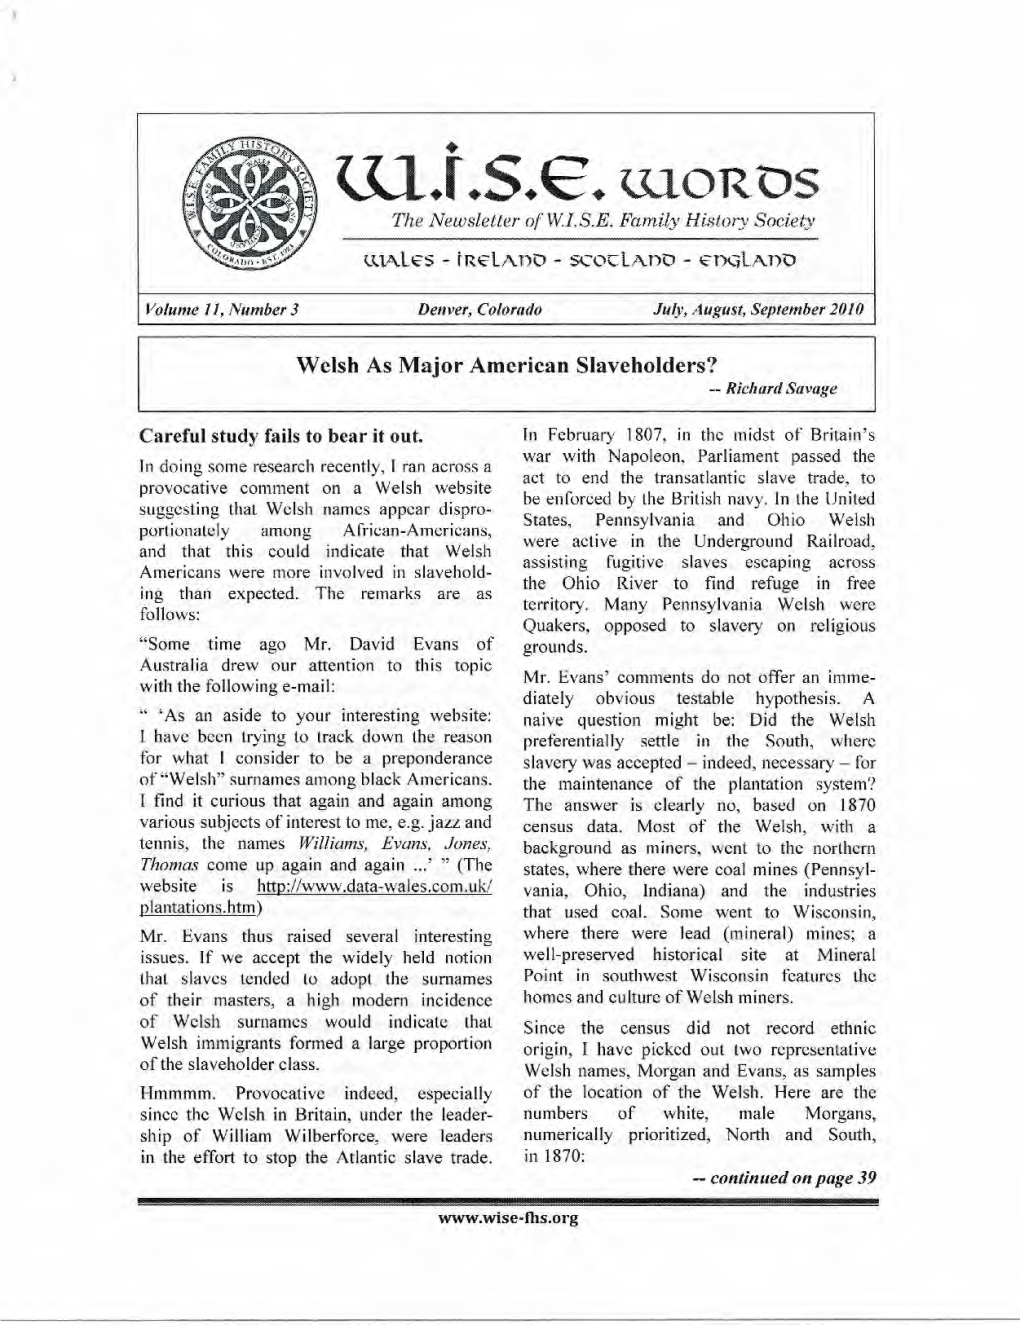 E.S.C. “Aortas the Newsletter of W.I.S.E